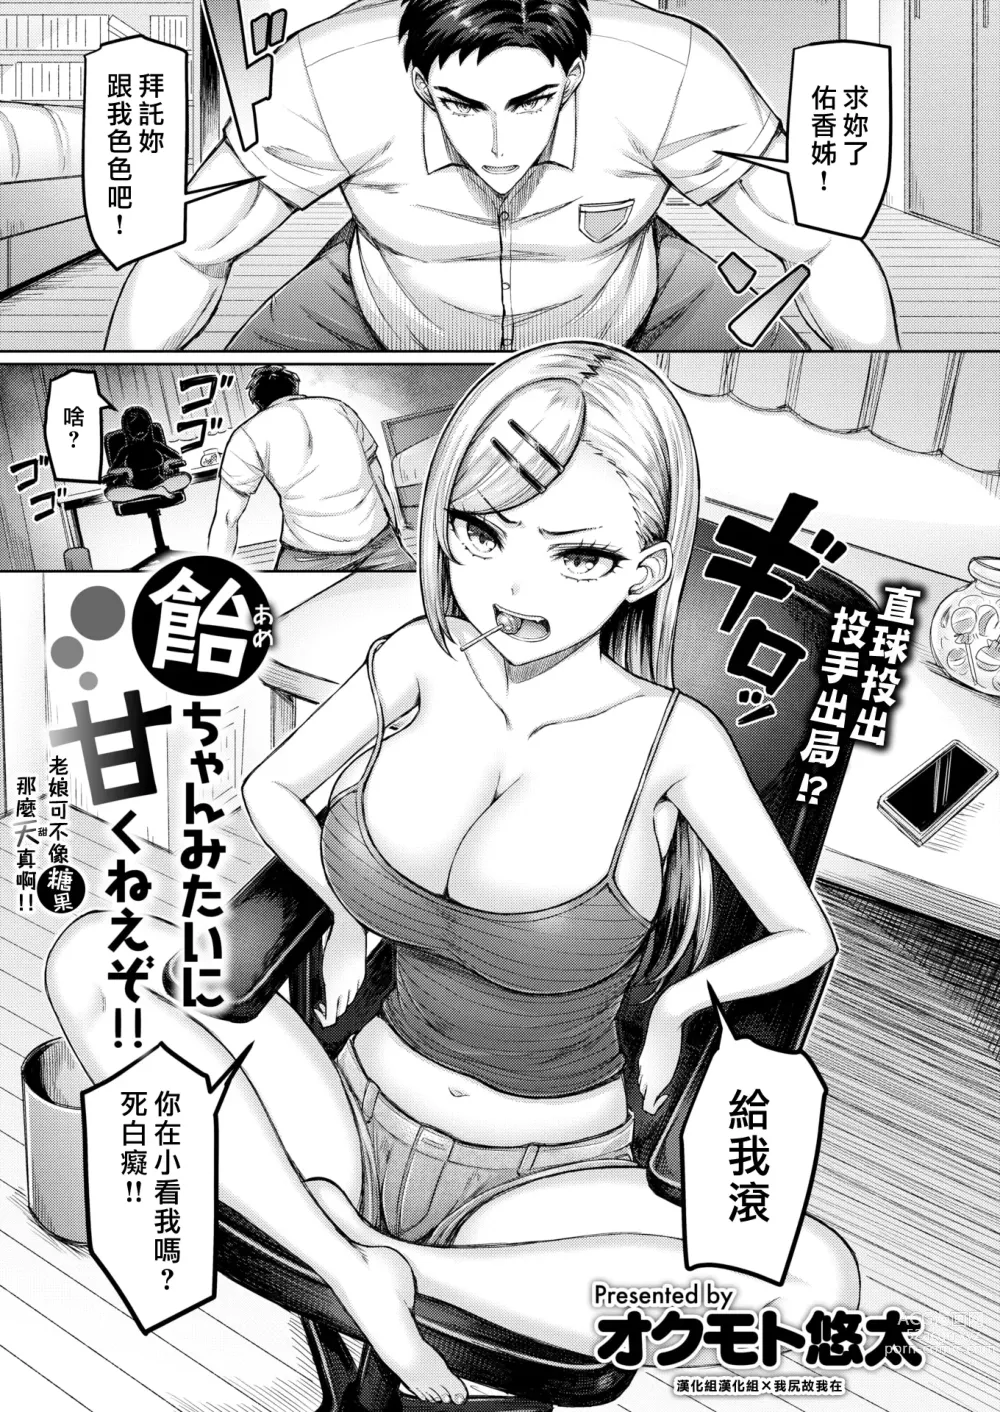 Page 1 of manga 老娘可不像糖果那麼天真啊!!